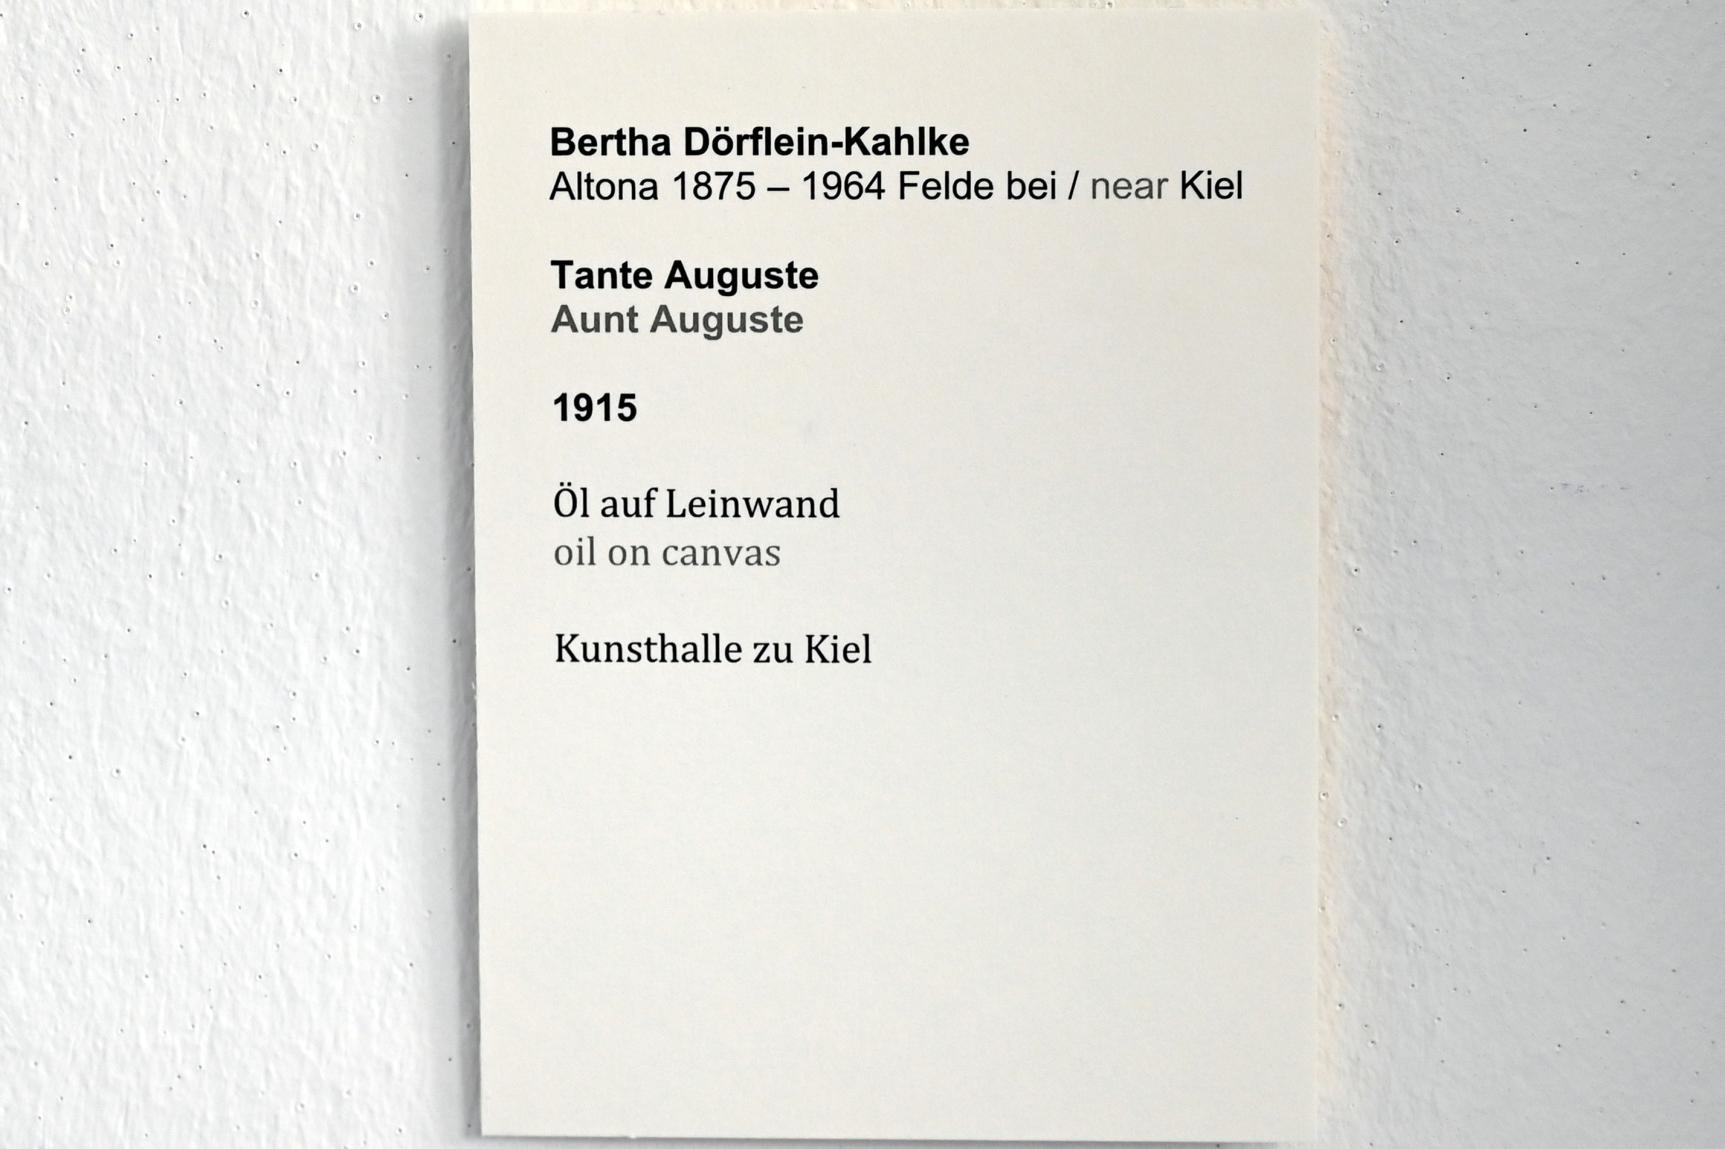 Bertha Dörflein-Kahlke (1915), Tante Auguste, Kiel, Kunsthalle, Künstlerinnen um 1900, 1915, Bild 2/2